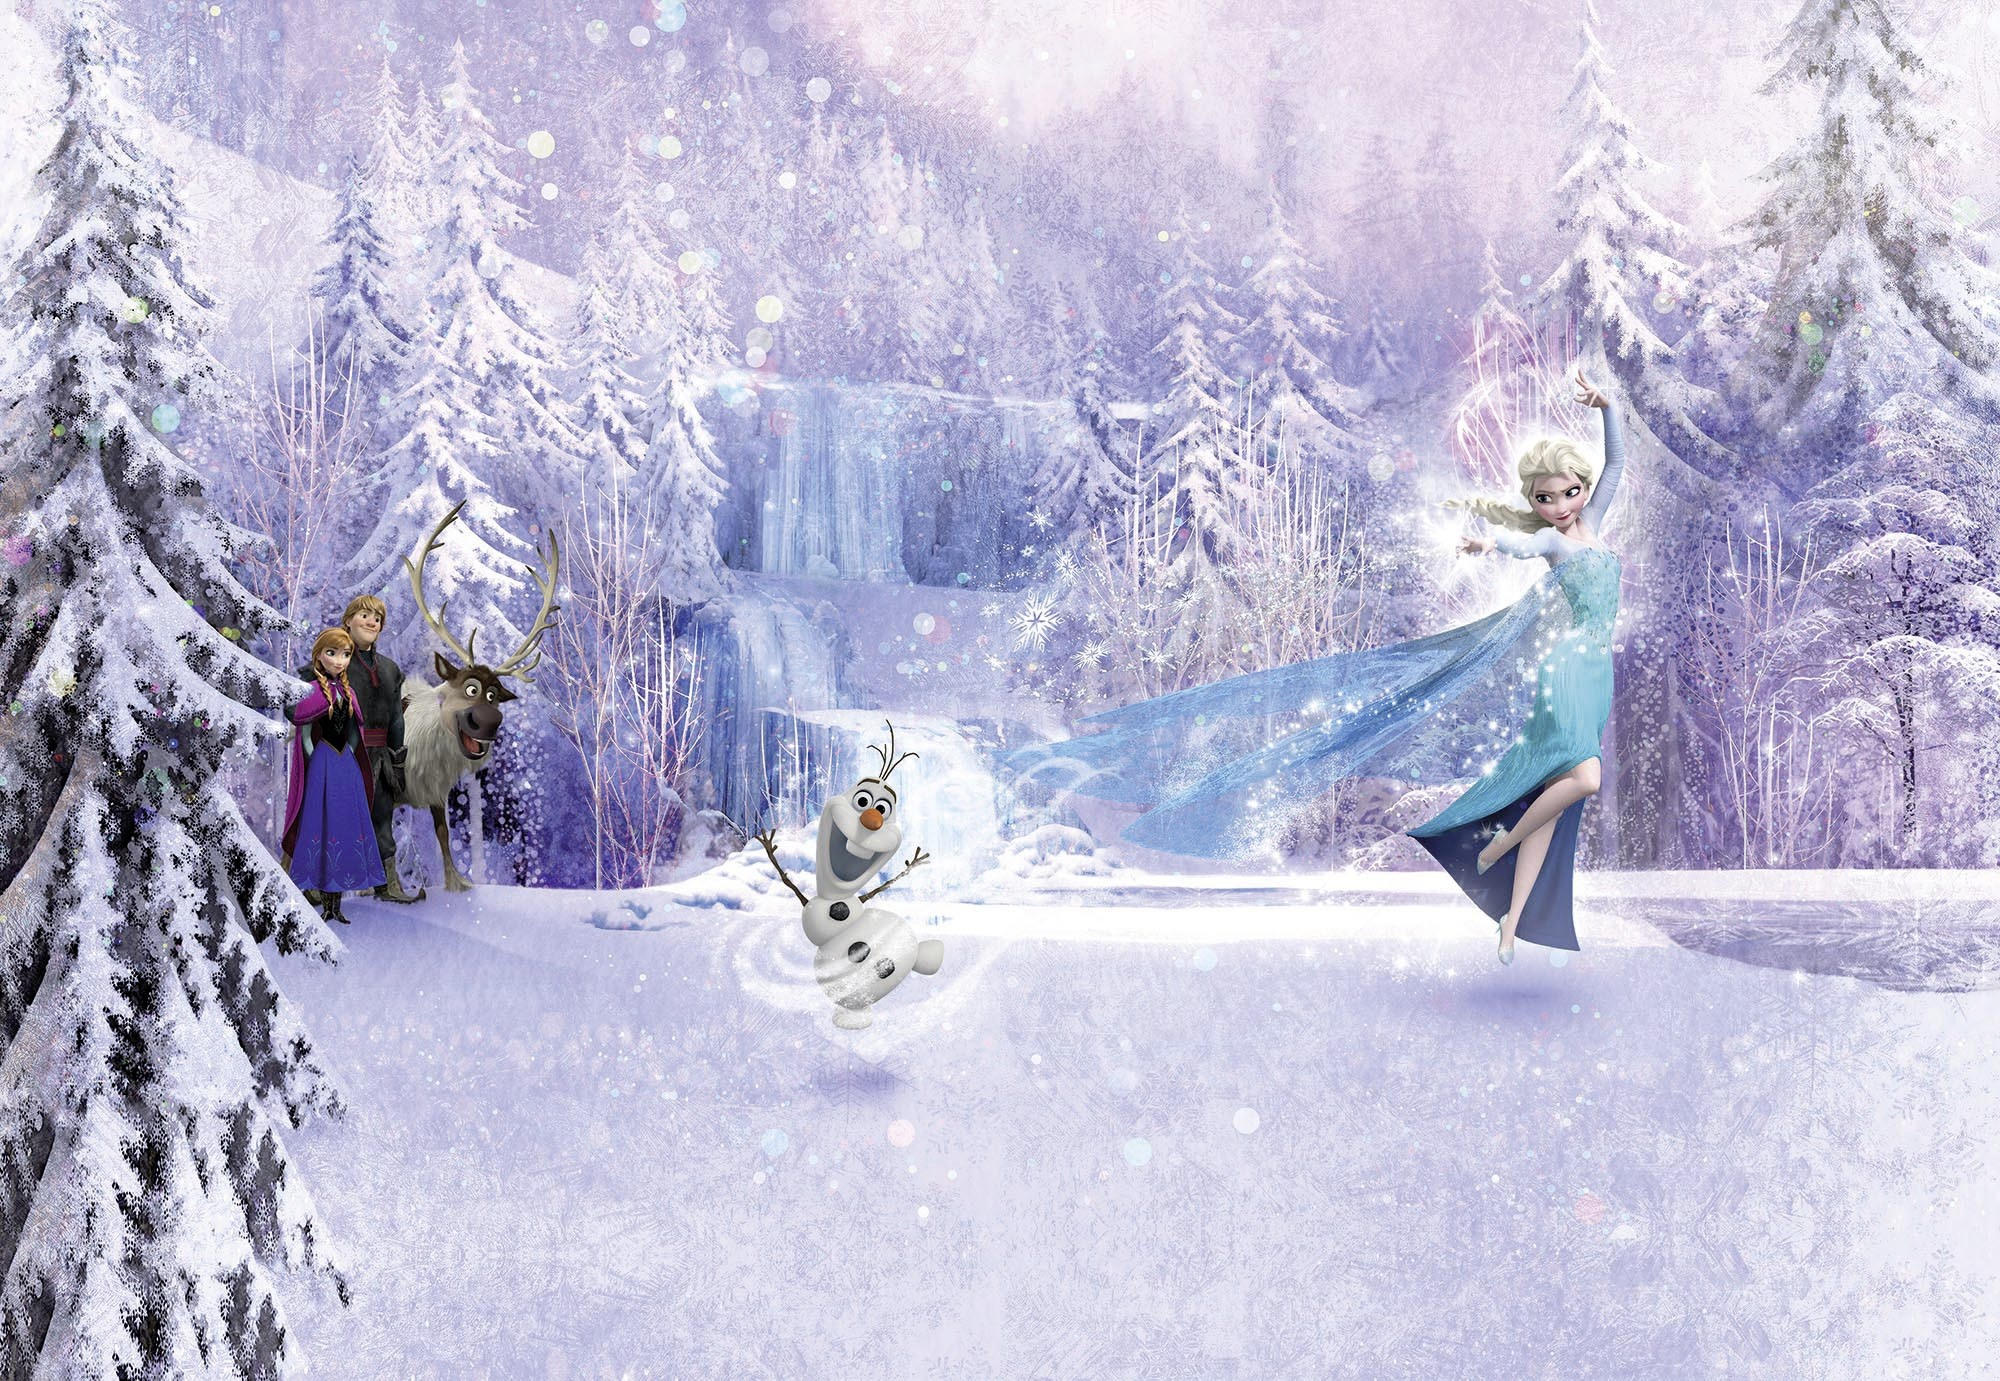 FOTOTAPETE Frozen  - Blau/Lila, Basics, Papier (368/254cm) - Disney